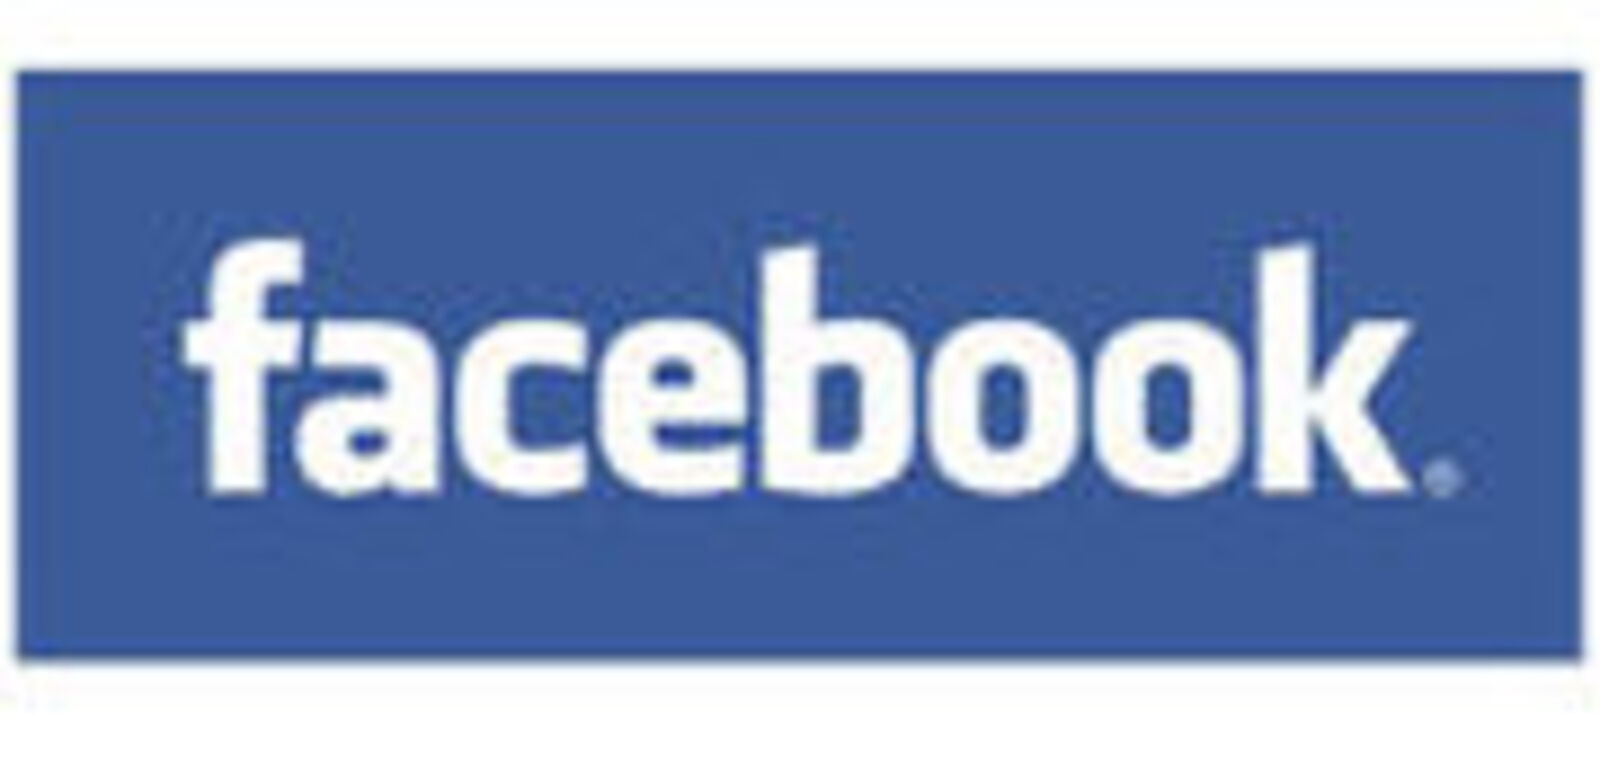 image logoFacebook.jpg (3.9kB)
Lien vers: https://www.facebook.com/moveagripage/